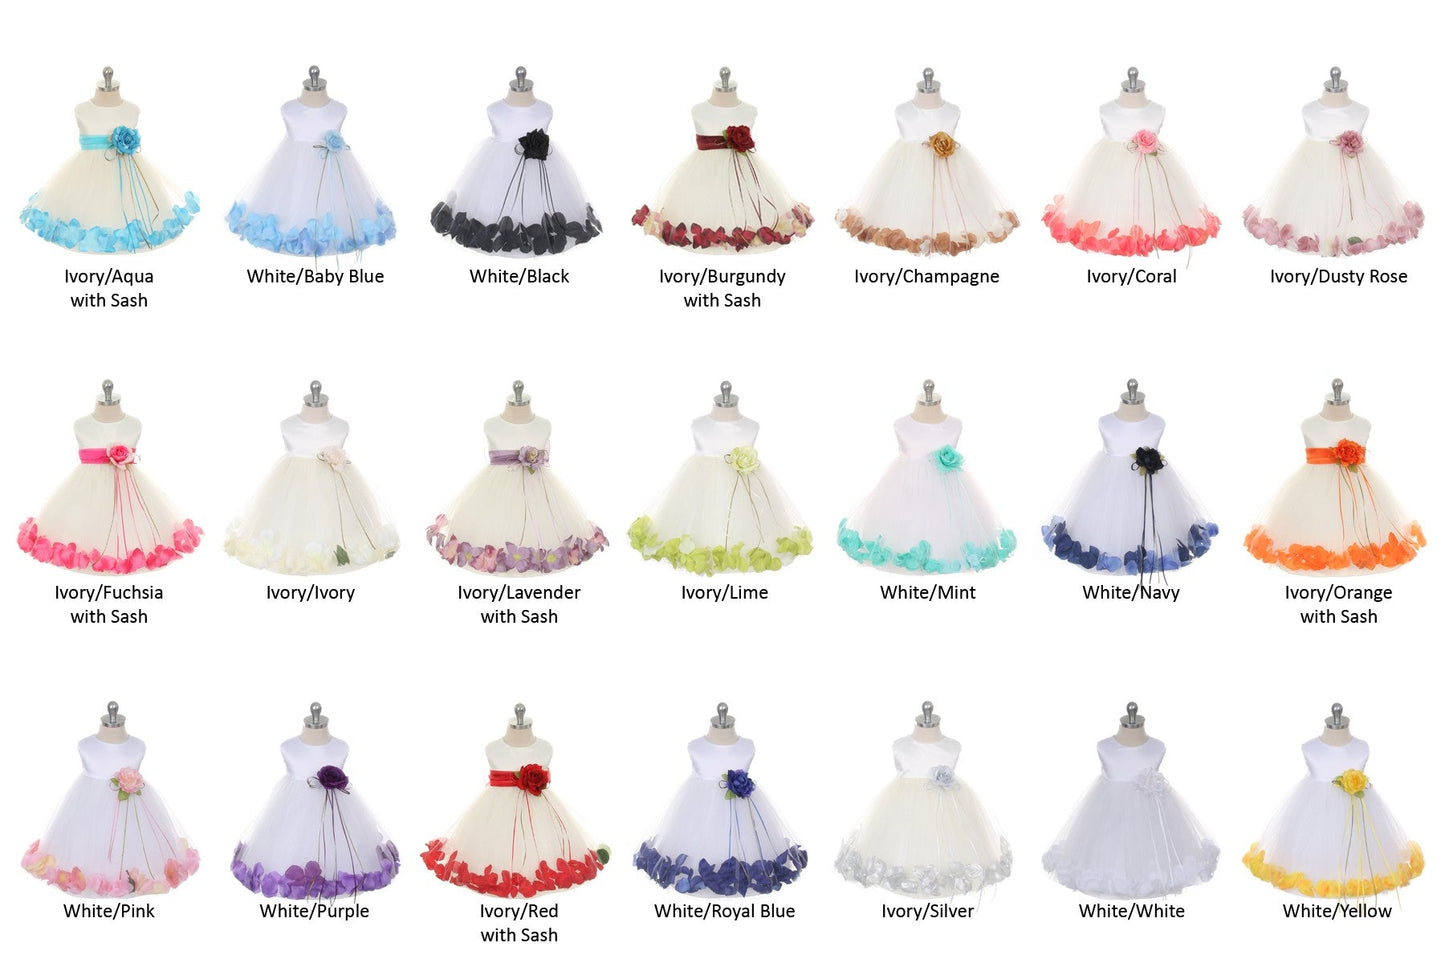 Classics Flower Petal  Dress  - Blush  - Baby ❤️